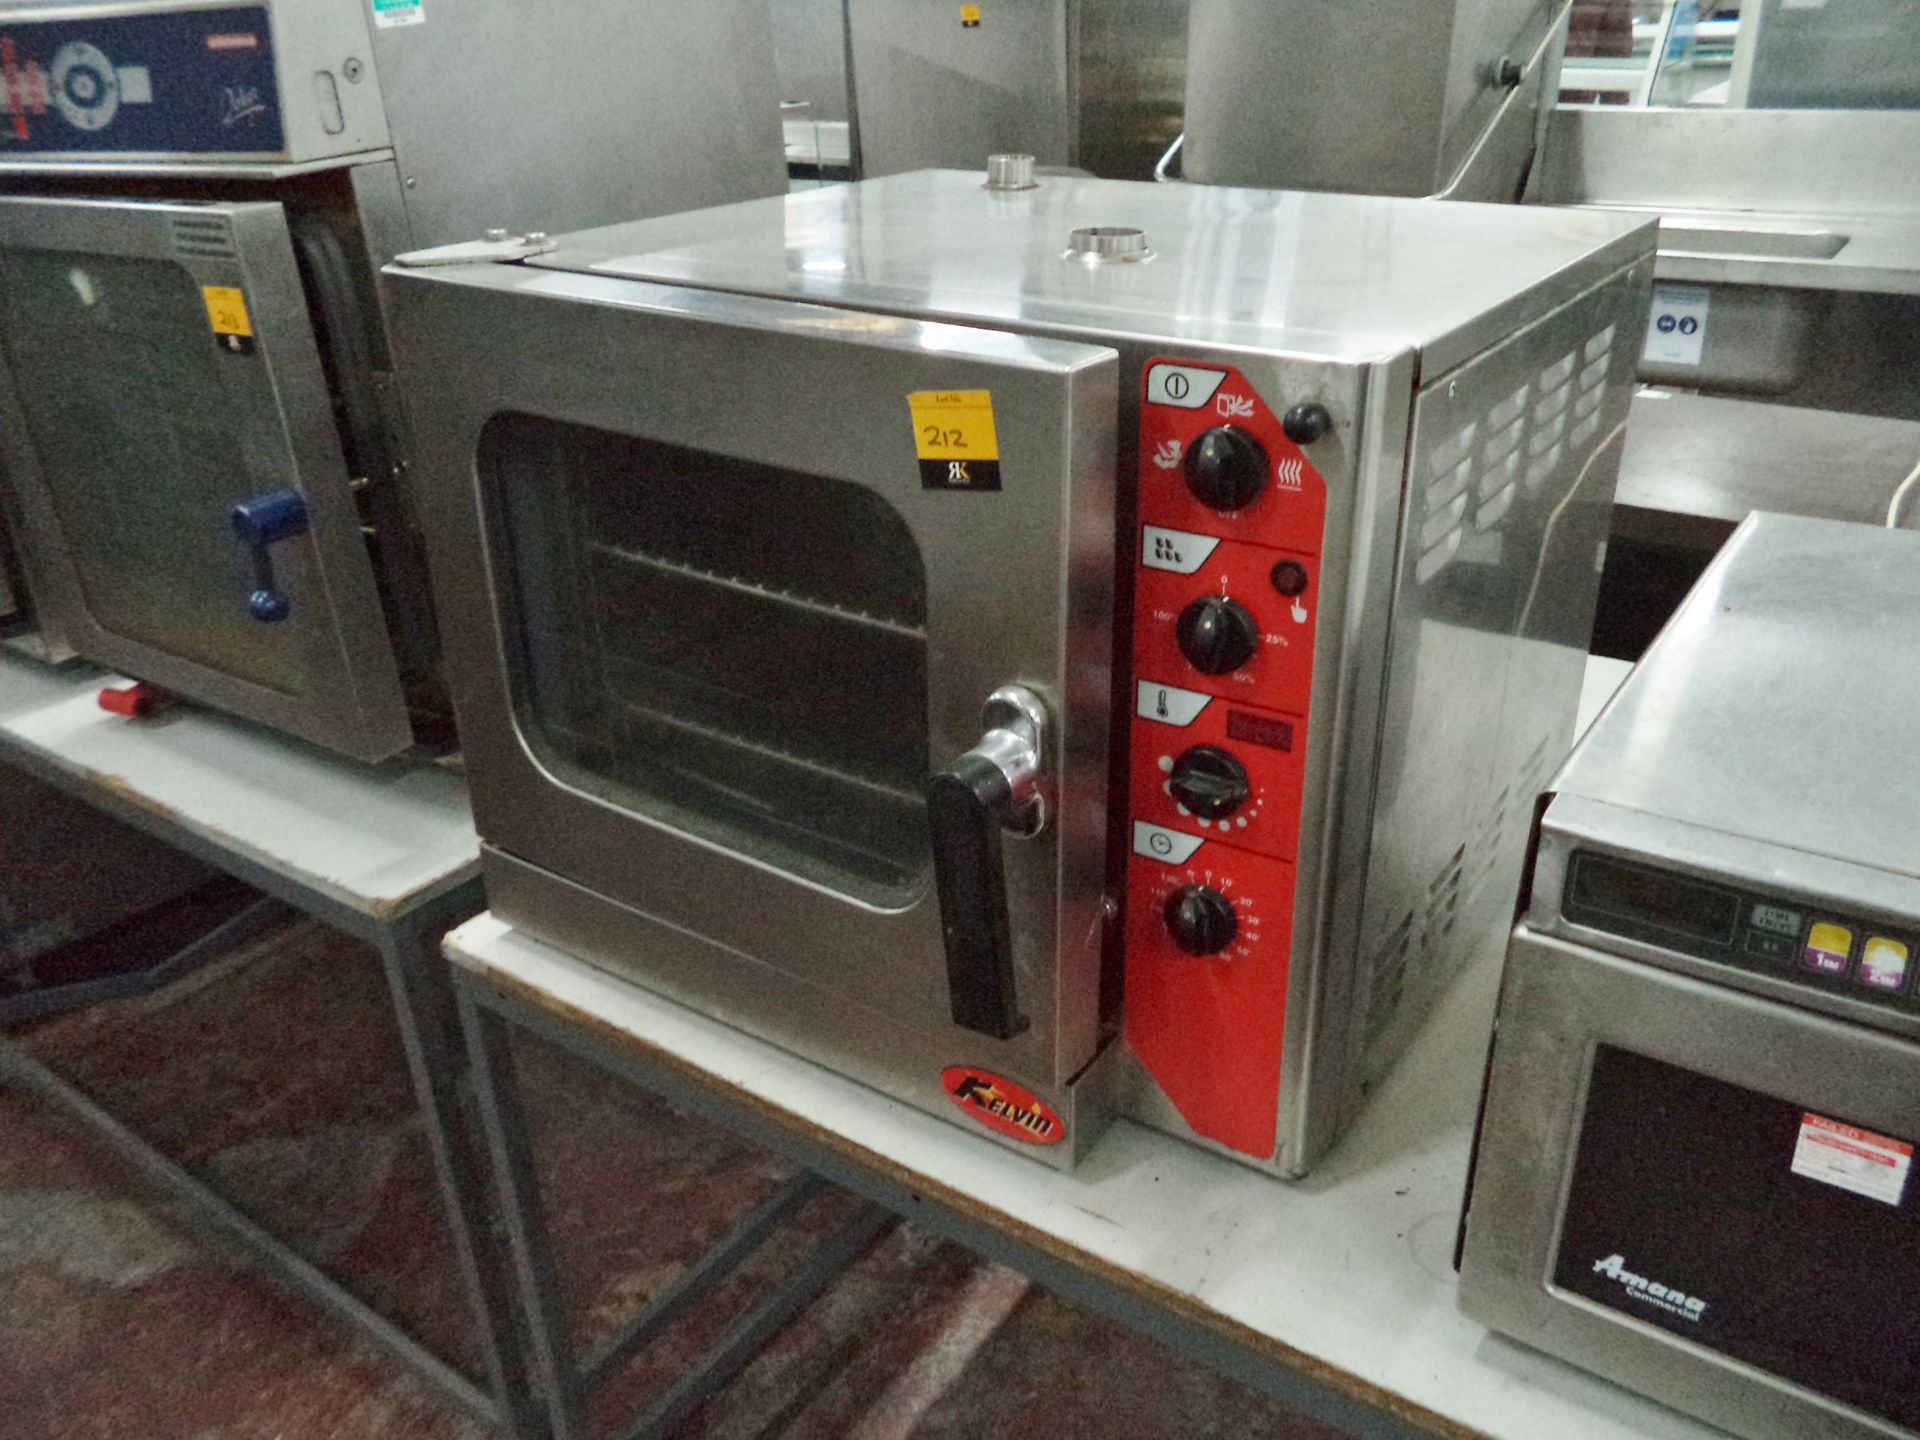 Kelvin compact multifunction oven model KE234 IMPORTANT: Please remember goods successfully bid upon